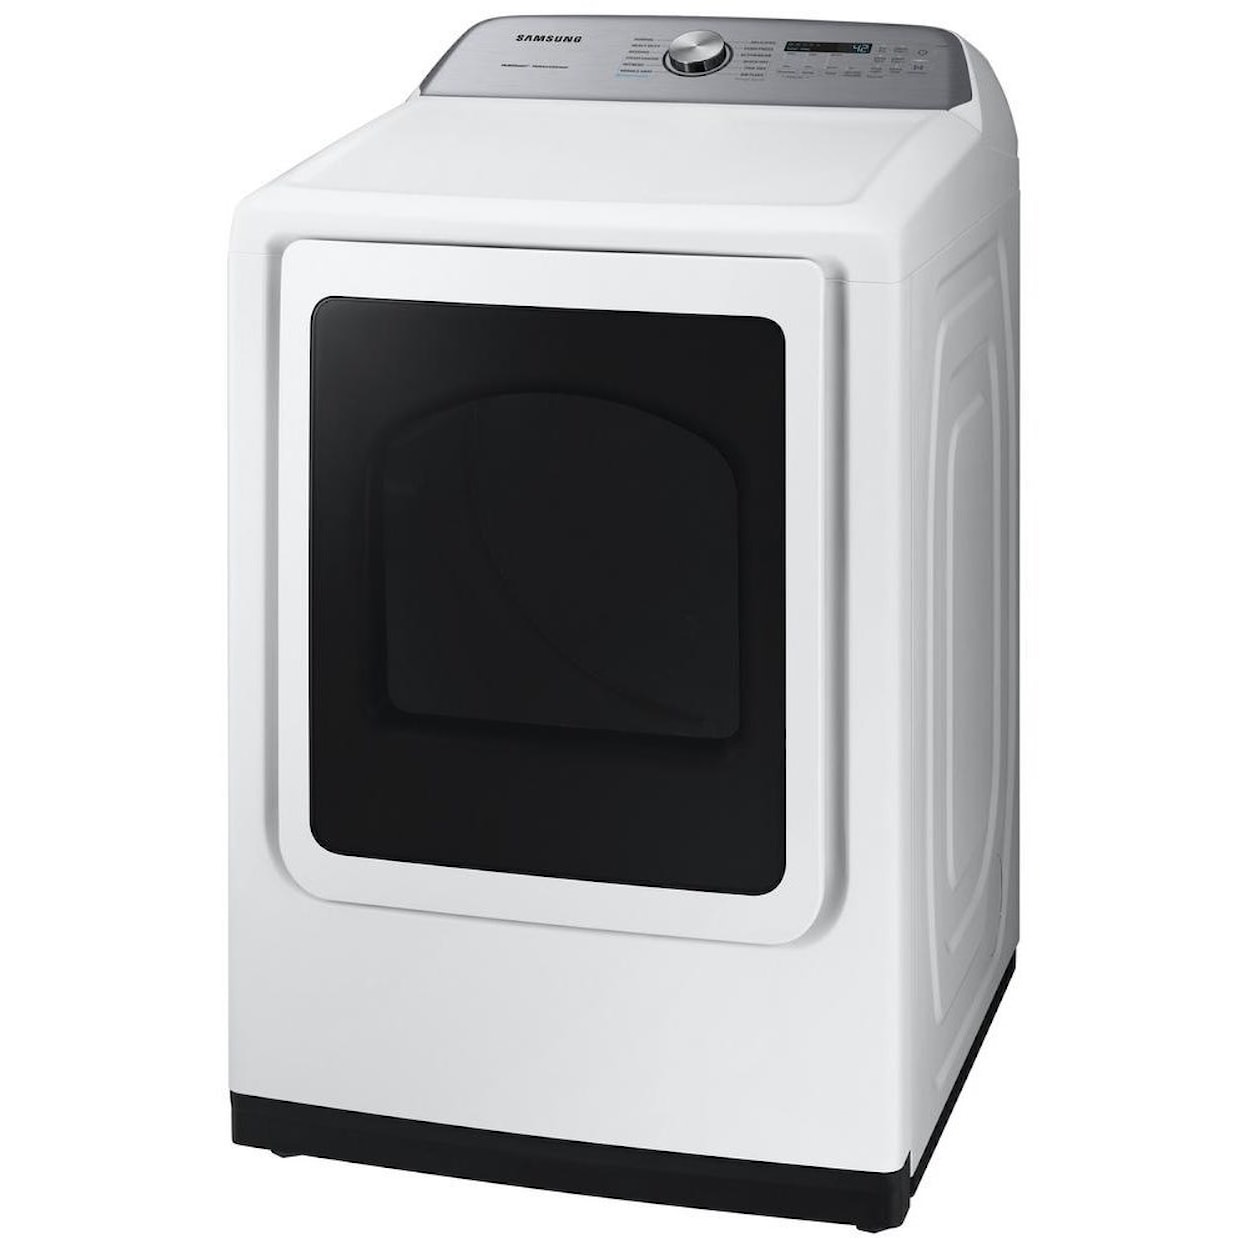 Samsung Appliances Dryers- Samsung 7.4 Cu. Ft. 27" Gas Front Load Dryer